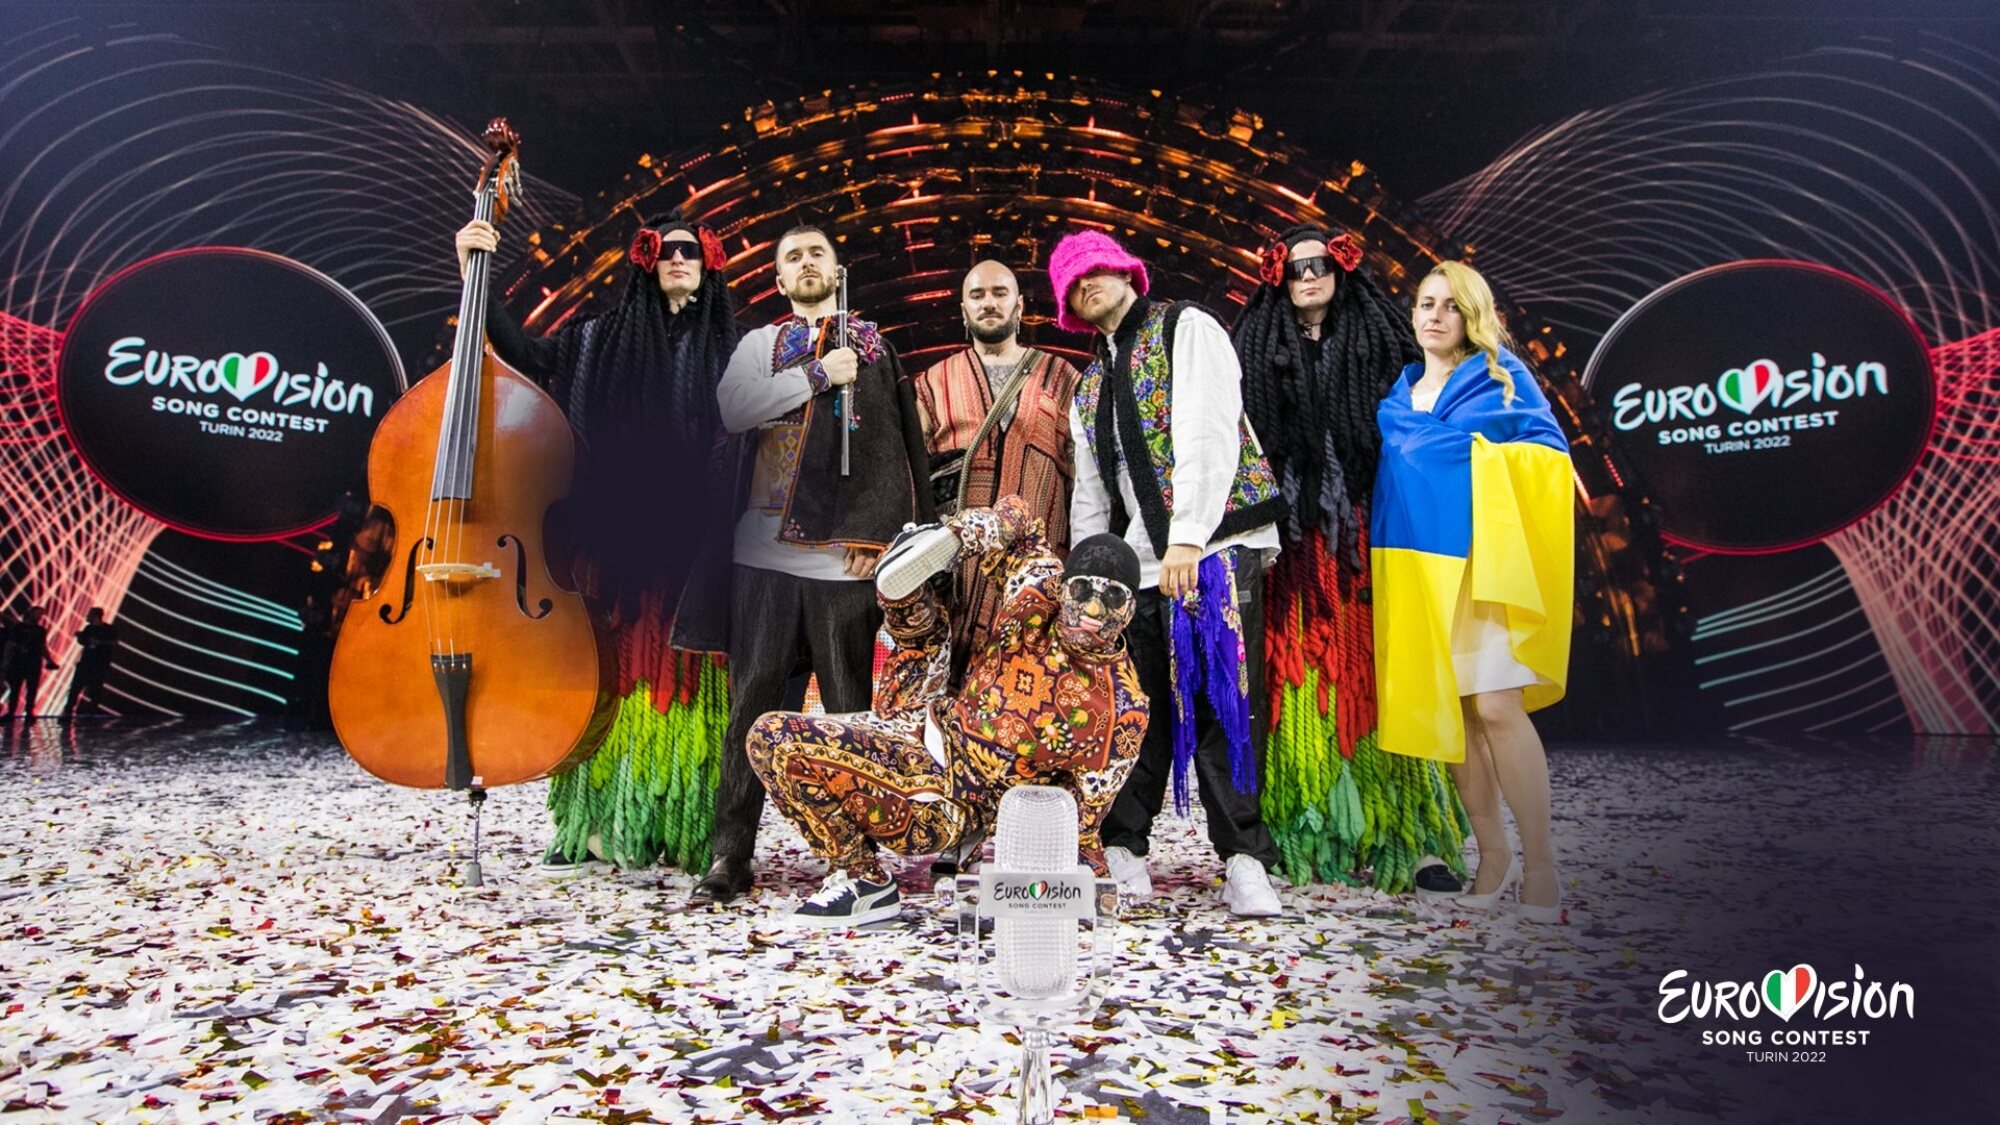 Kalush Orchestra, ganadores de Eurovisión 2022 y representantes de Ucrania, interpretando "Stefania"